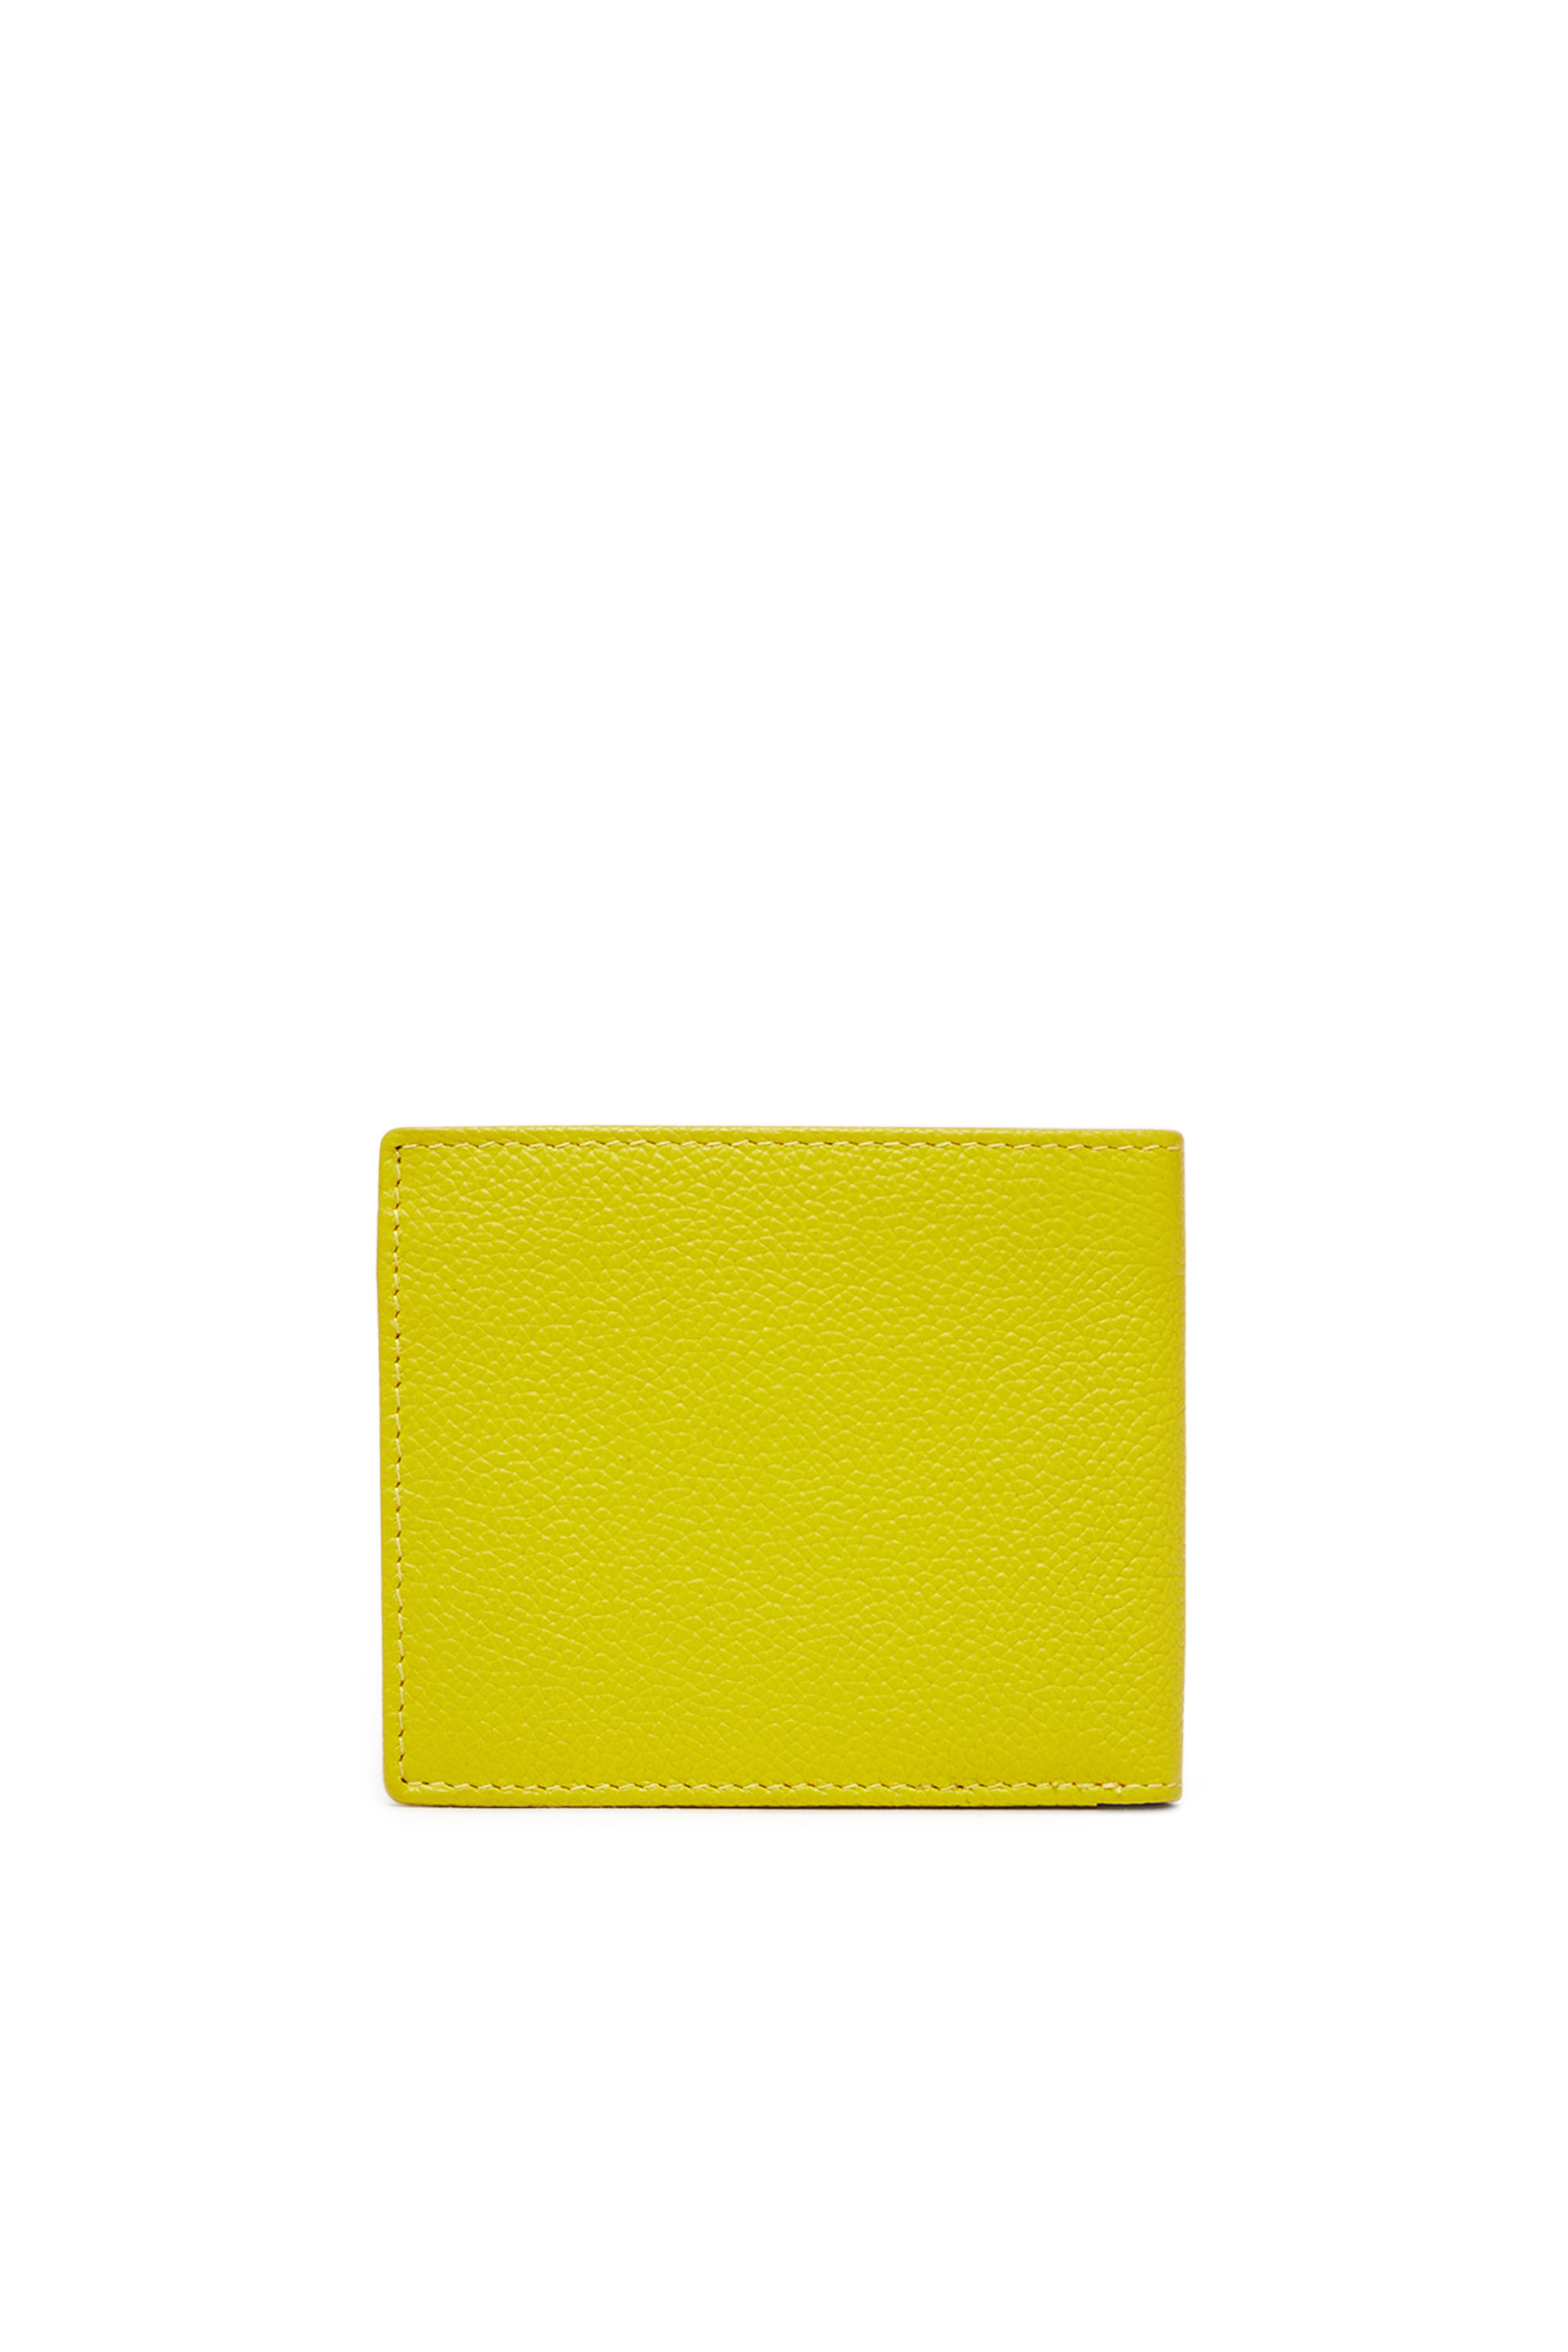 Diesel - BI FOLD COIN S, Man Bi-fold wallet in grainy leather in Yellow - Image 2